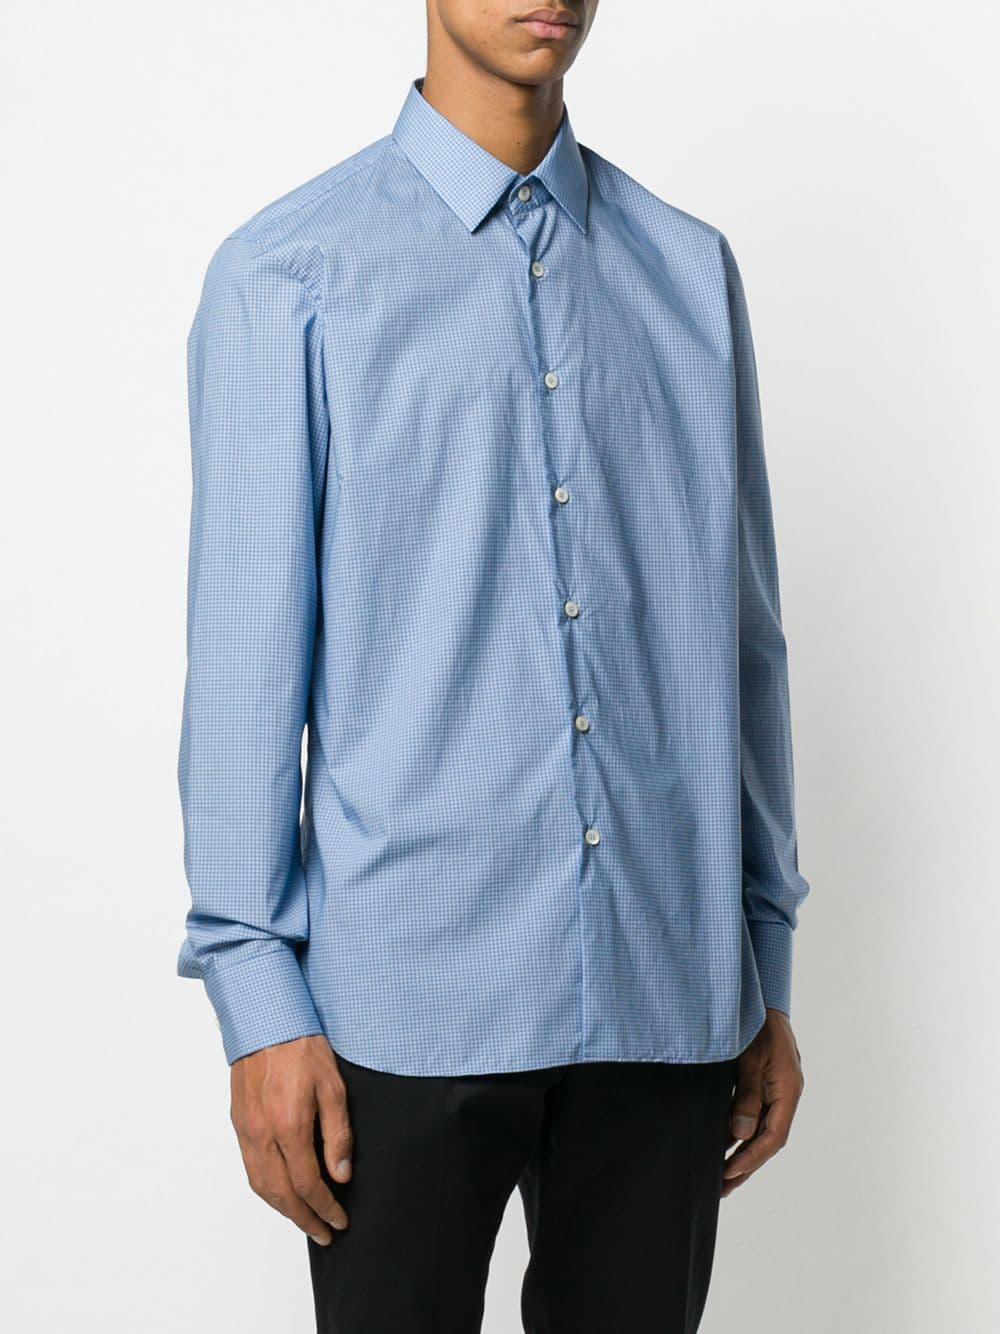 Prada Cotton Classic Formal Shirt in Blue for Men - Lyst